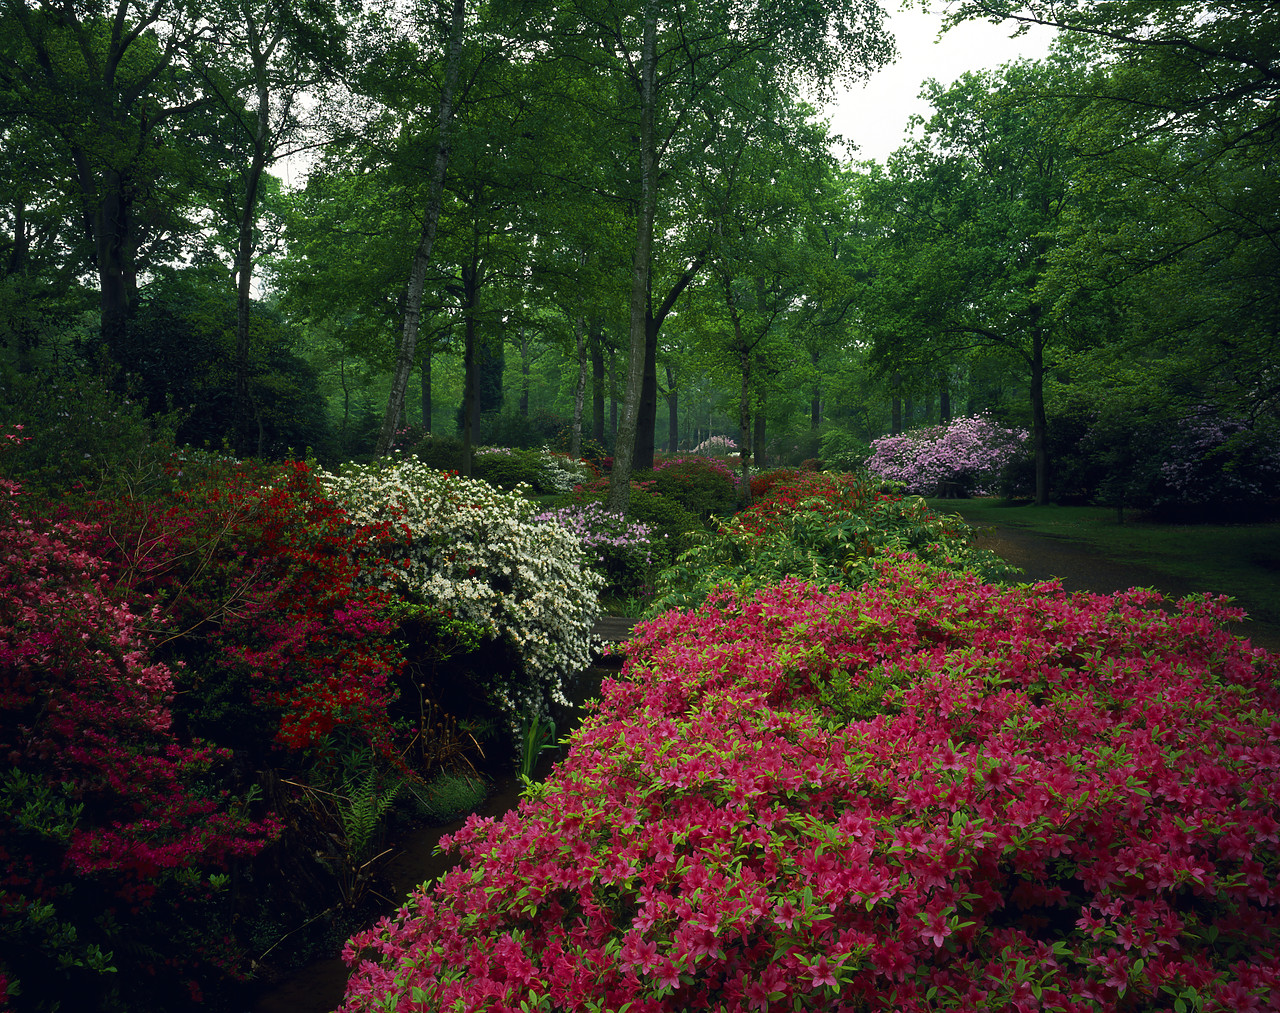 #881298-1 - Azalea Gardens, Isabella Plantation, Surrey, England